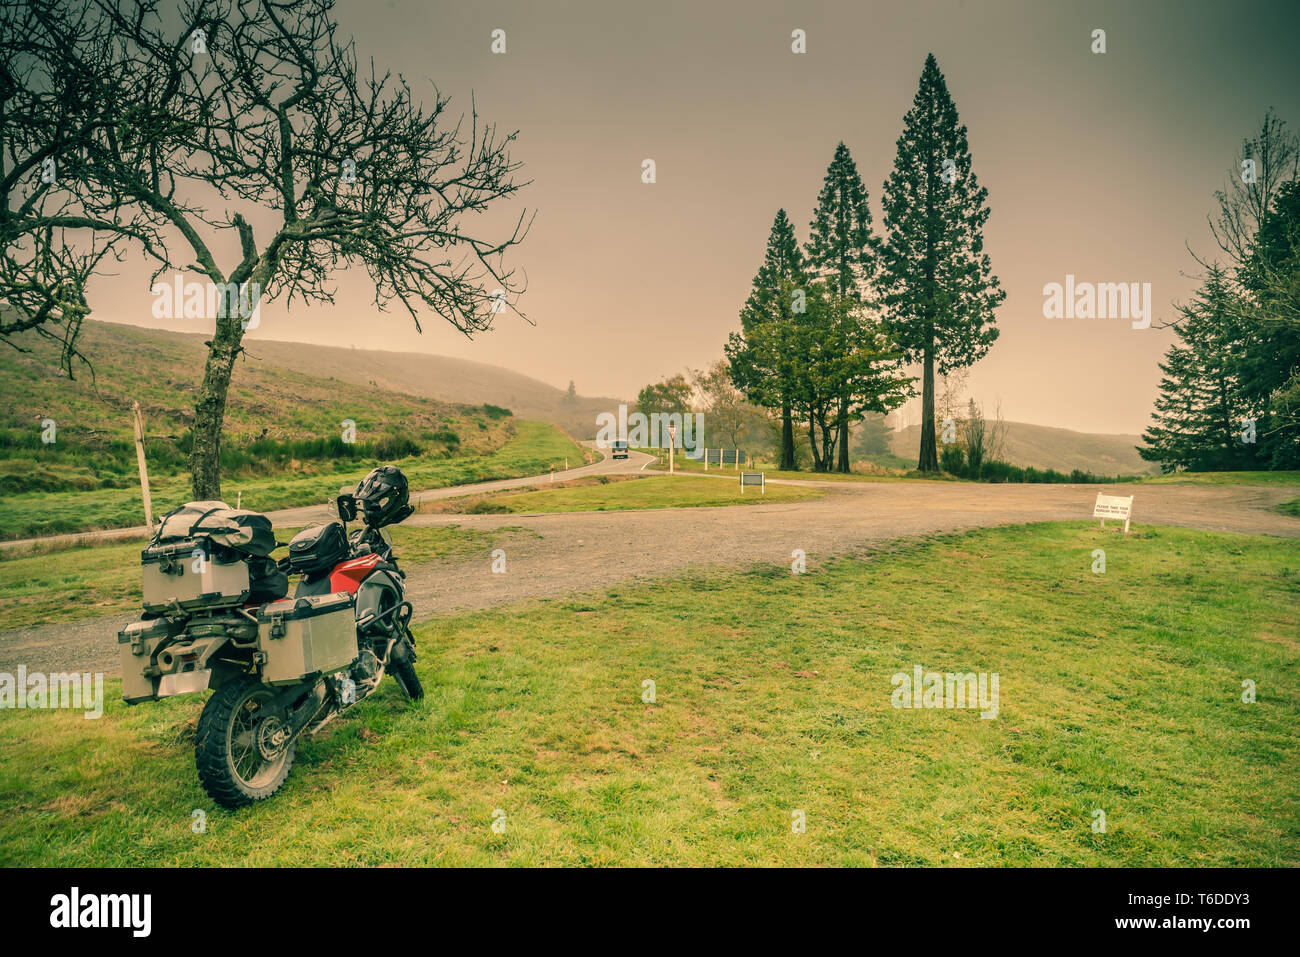 Adventure motorcycle ride Stock Photo